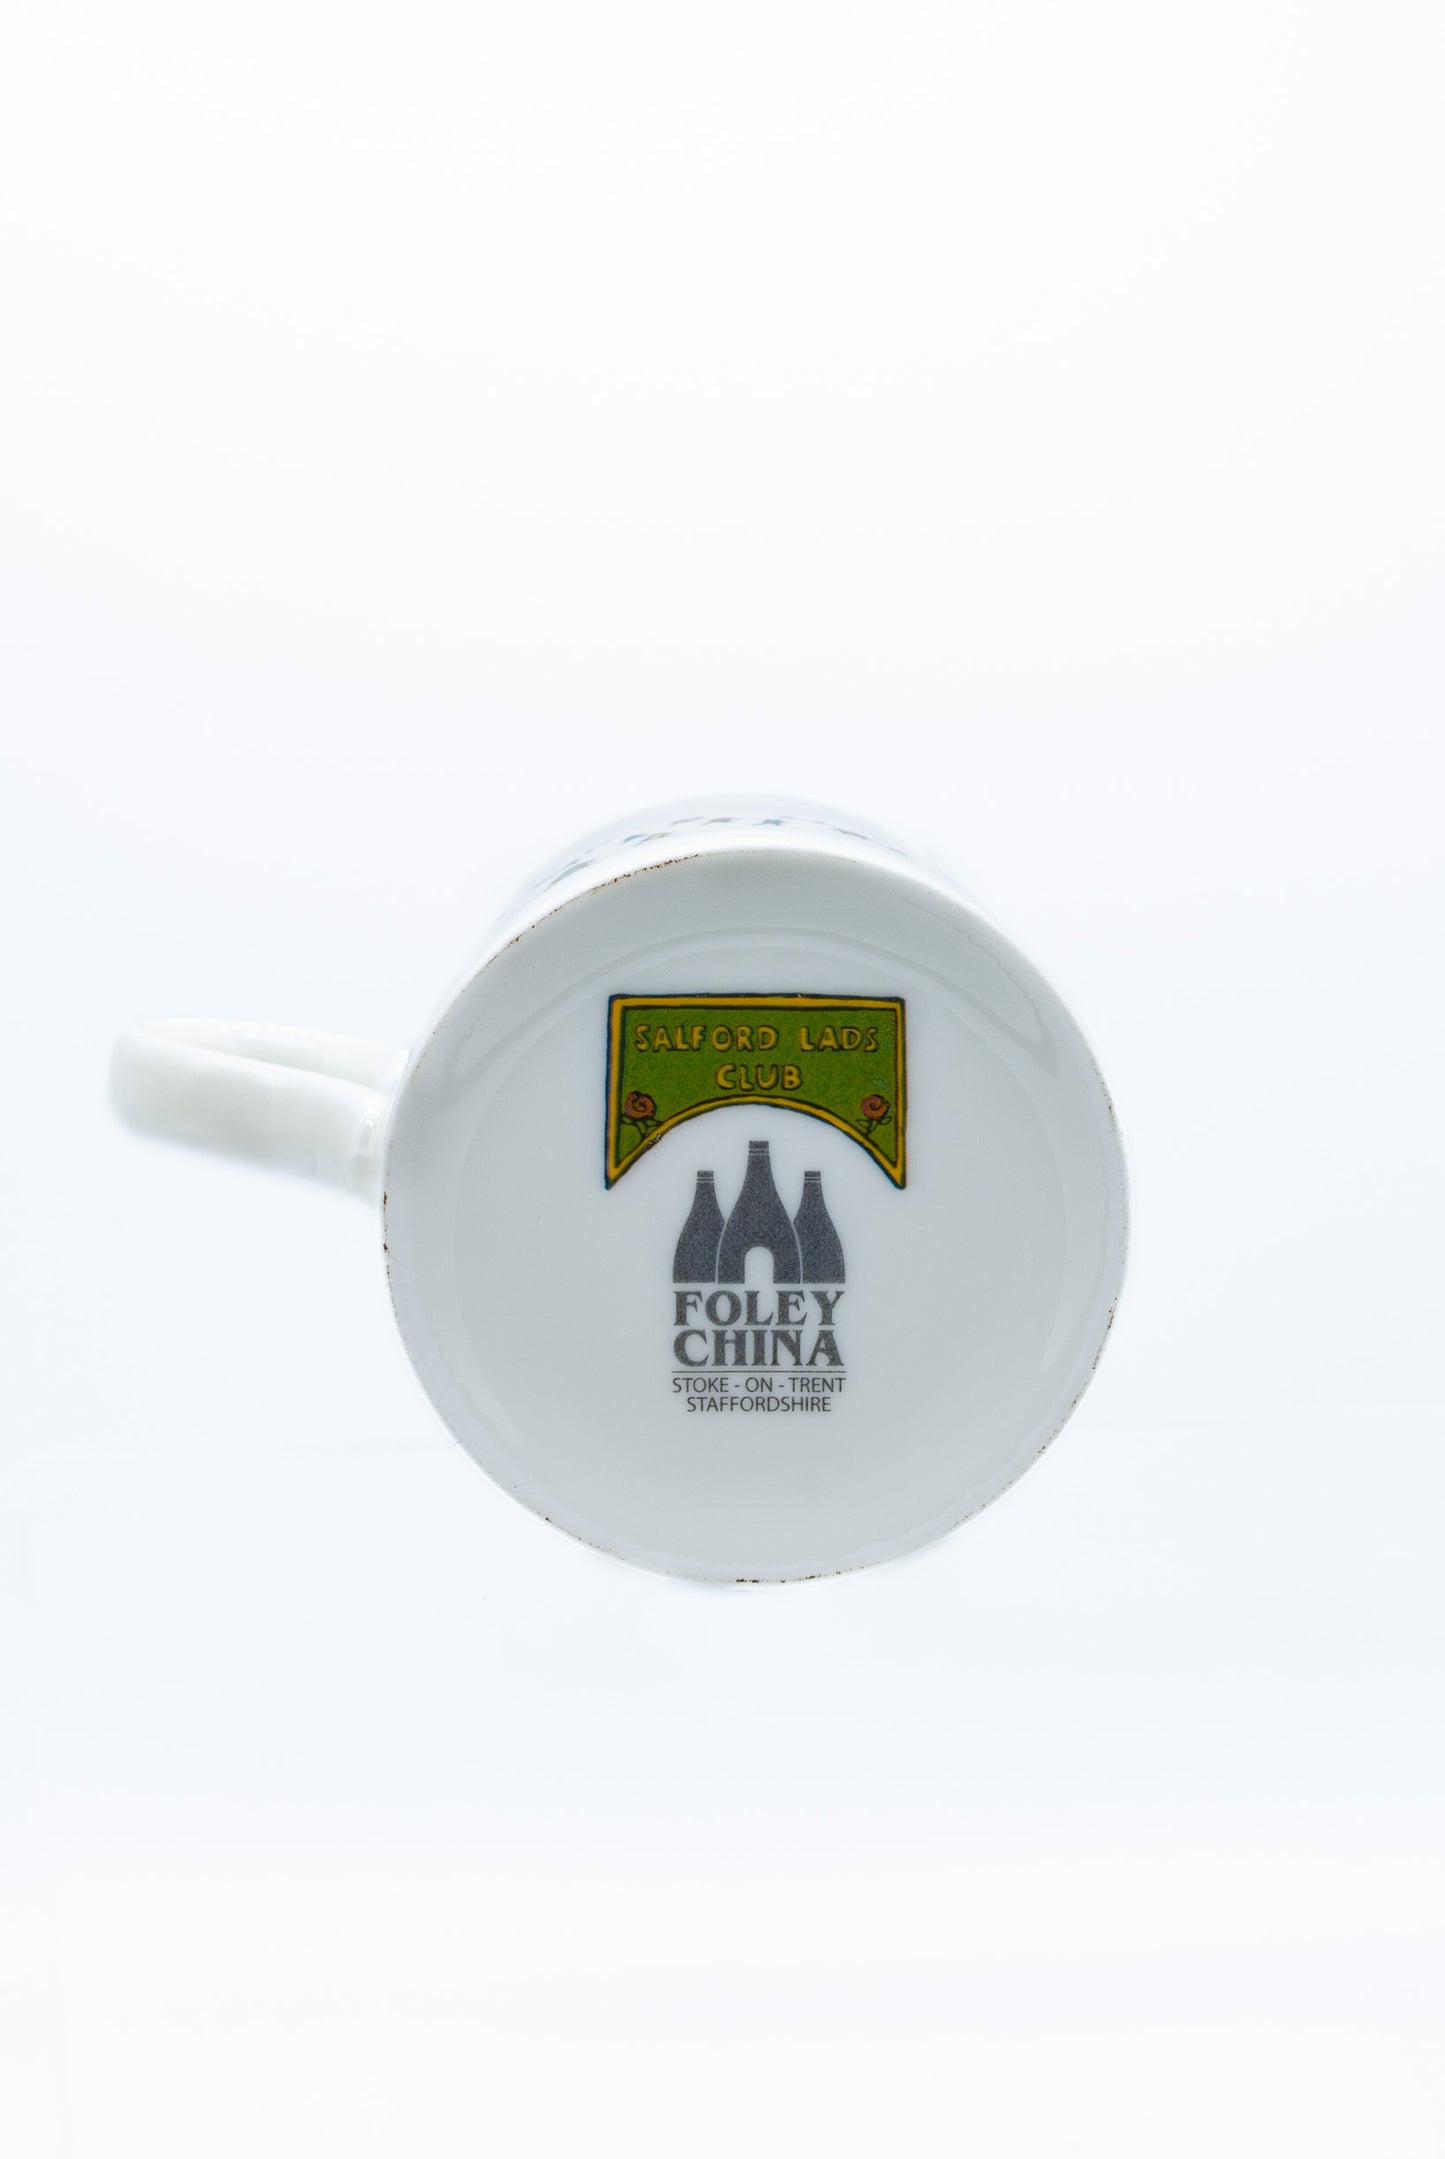 Salford Lads Club inspired Fine Bone China Mug by Foley Pottery